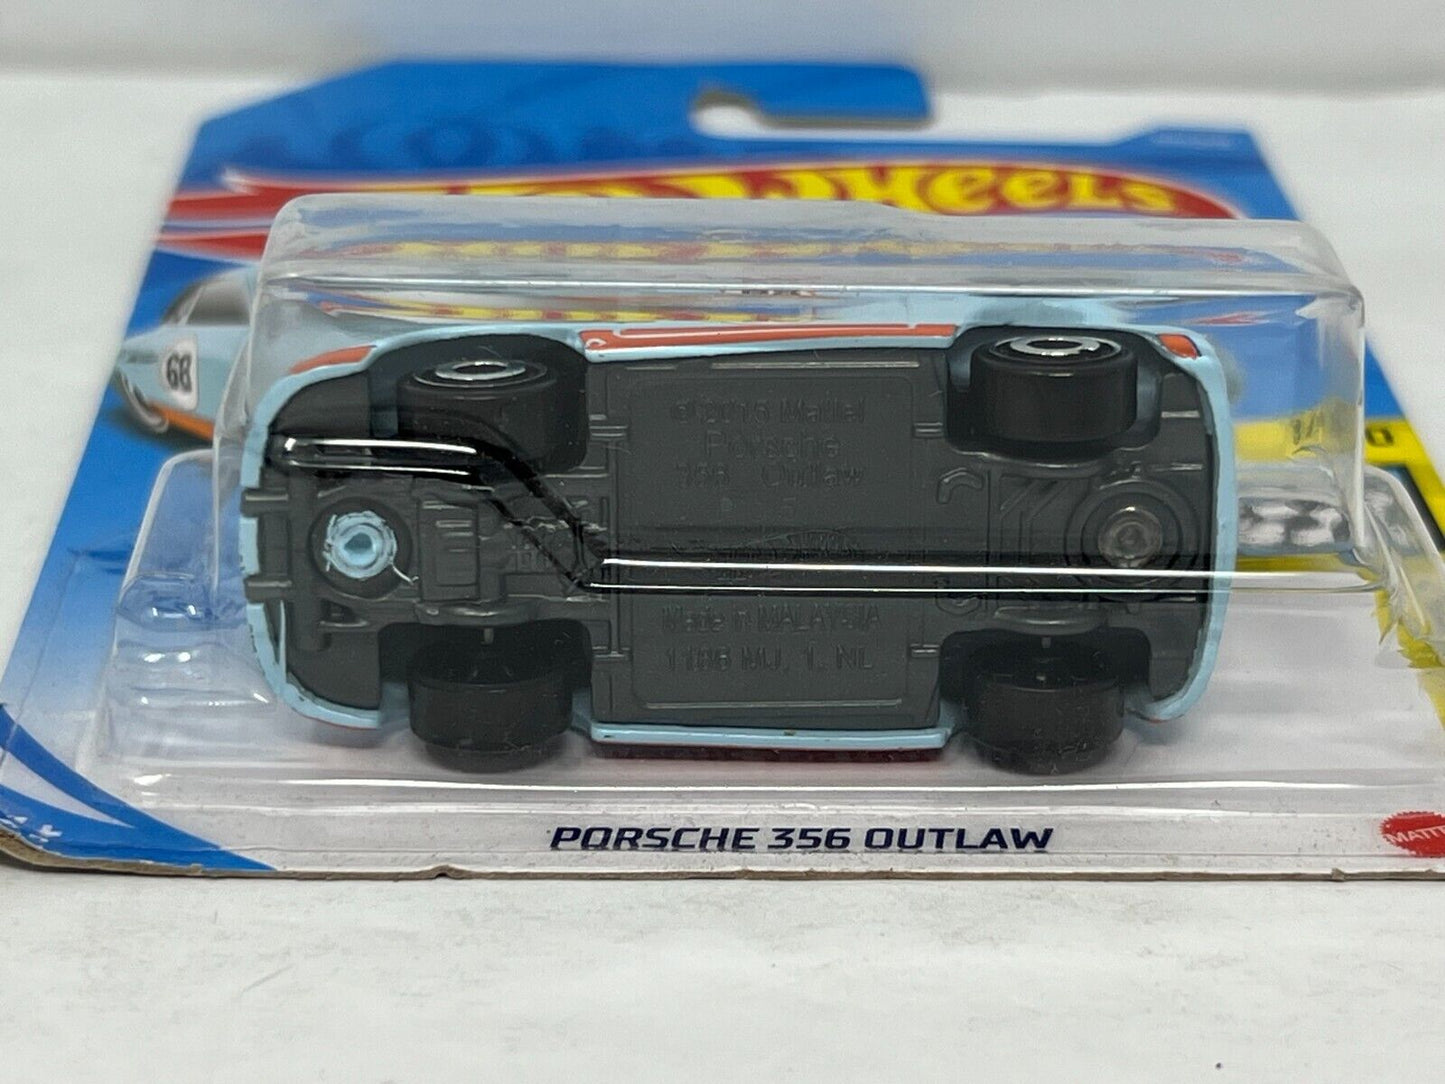 Hot Wheels HW Speed Graphics Porsche 356 Outlaw 1:64 Diecast